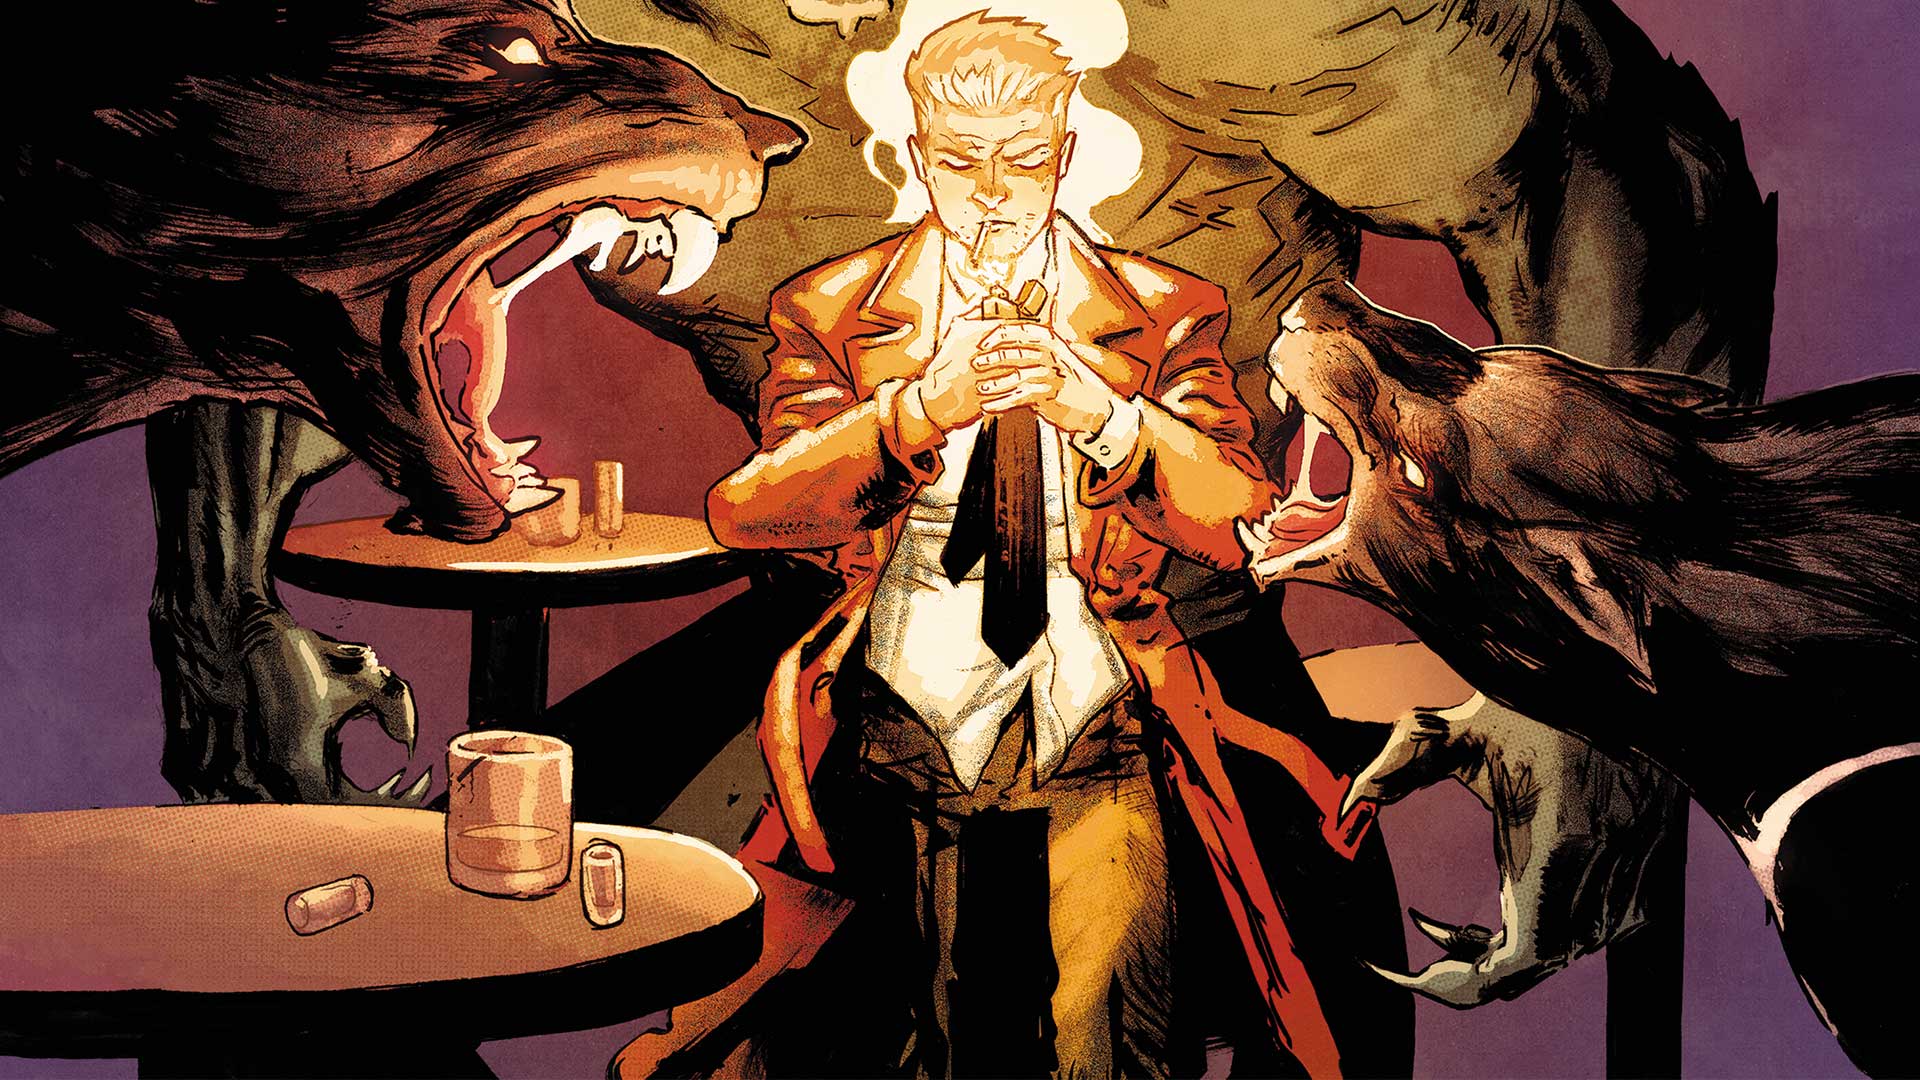 [EXCLUSIVE] DC Preview: Hellblazer #10